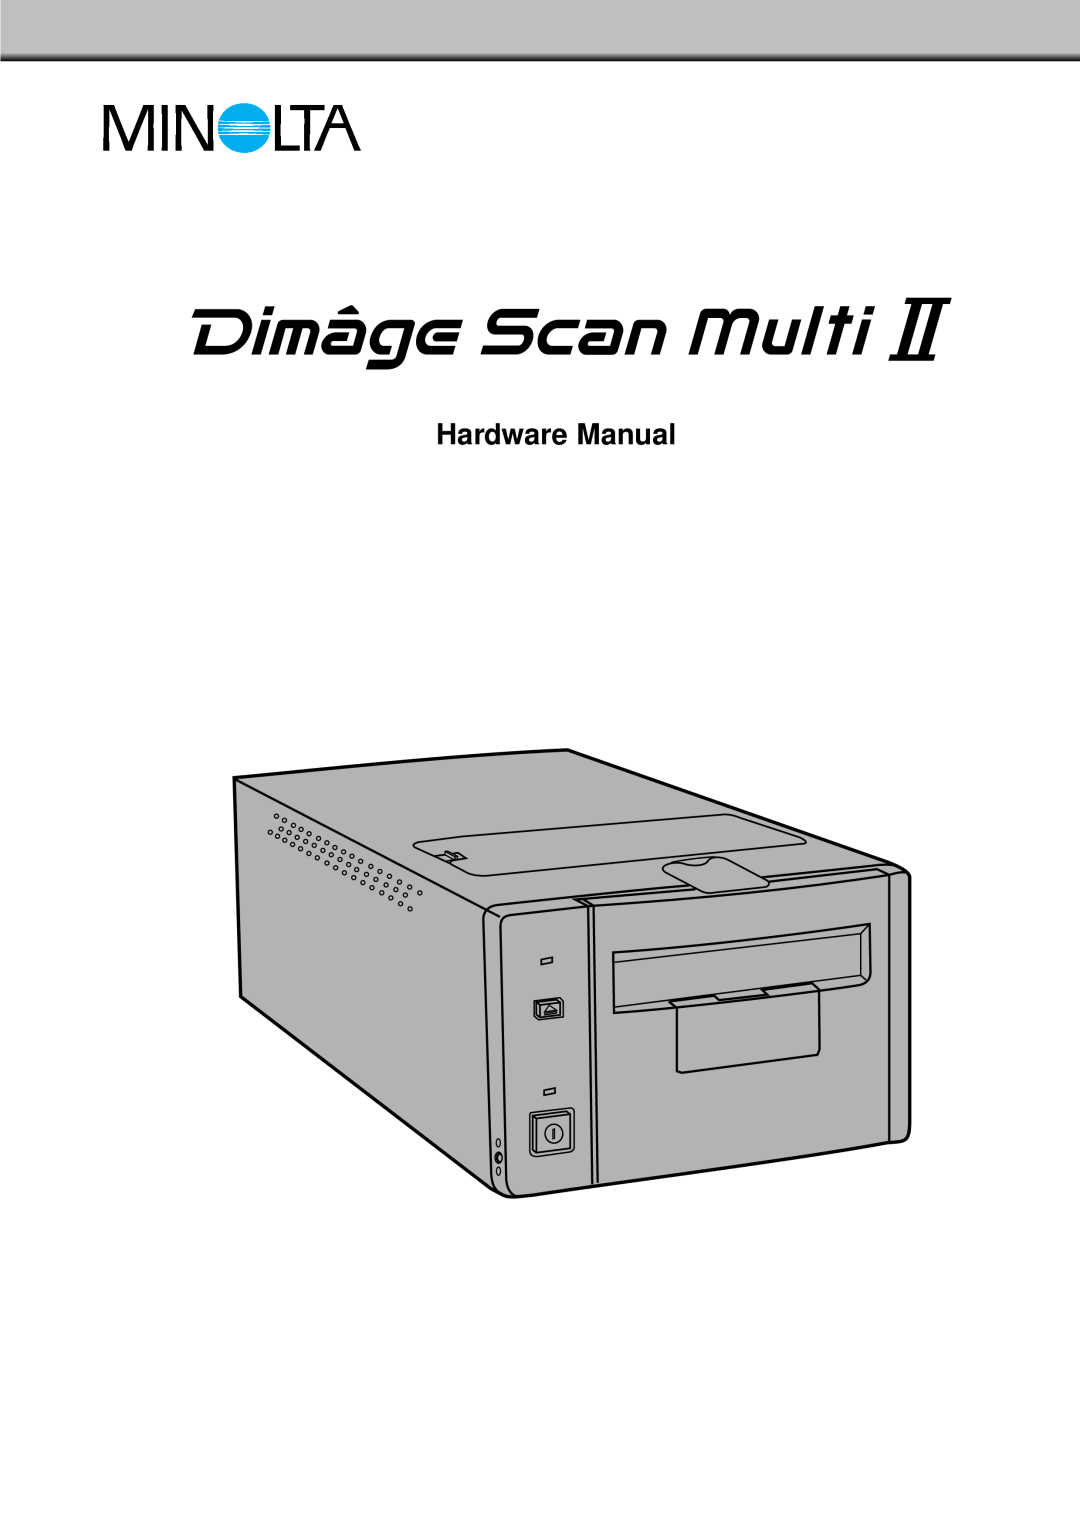 Konica Minolta II technical specifications DiMAGE Scan Elite Technical Specifications 